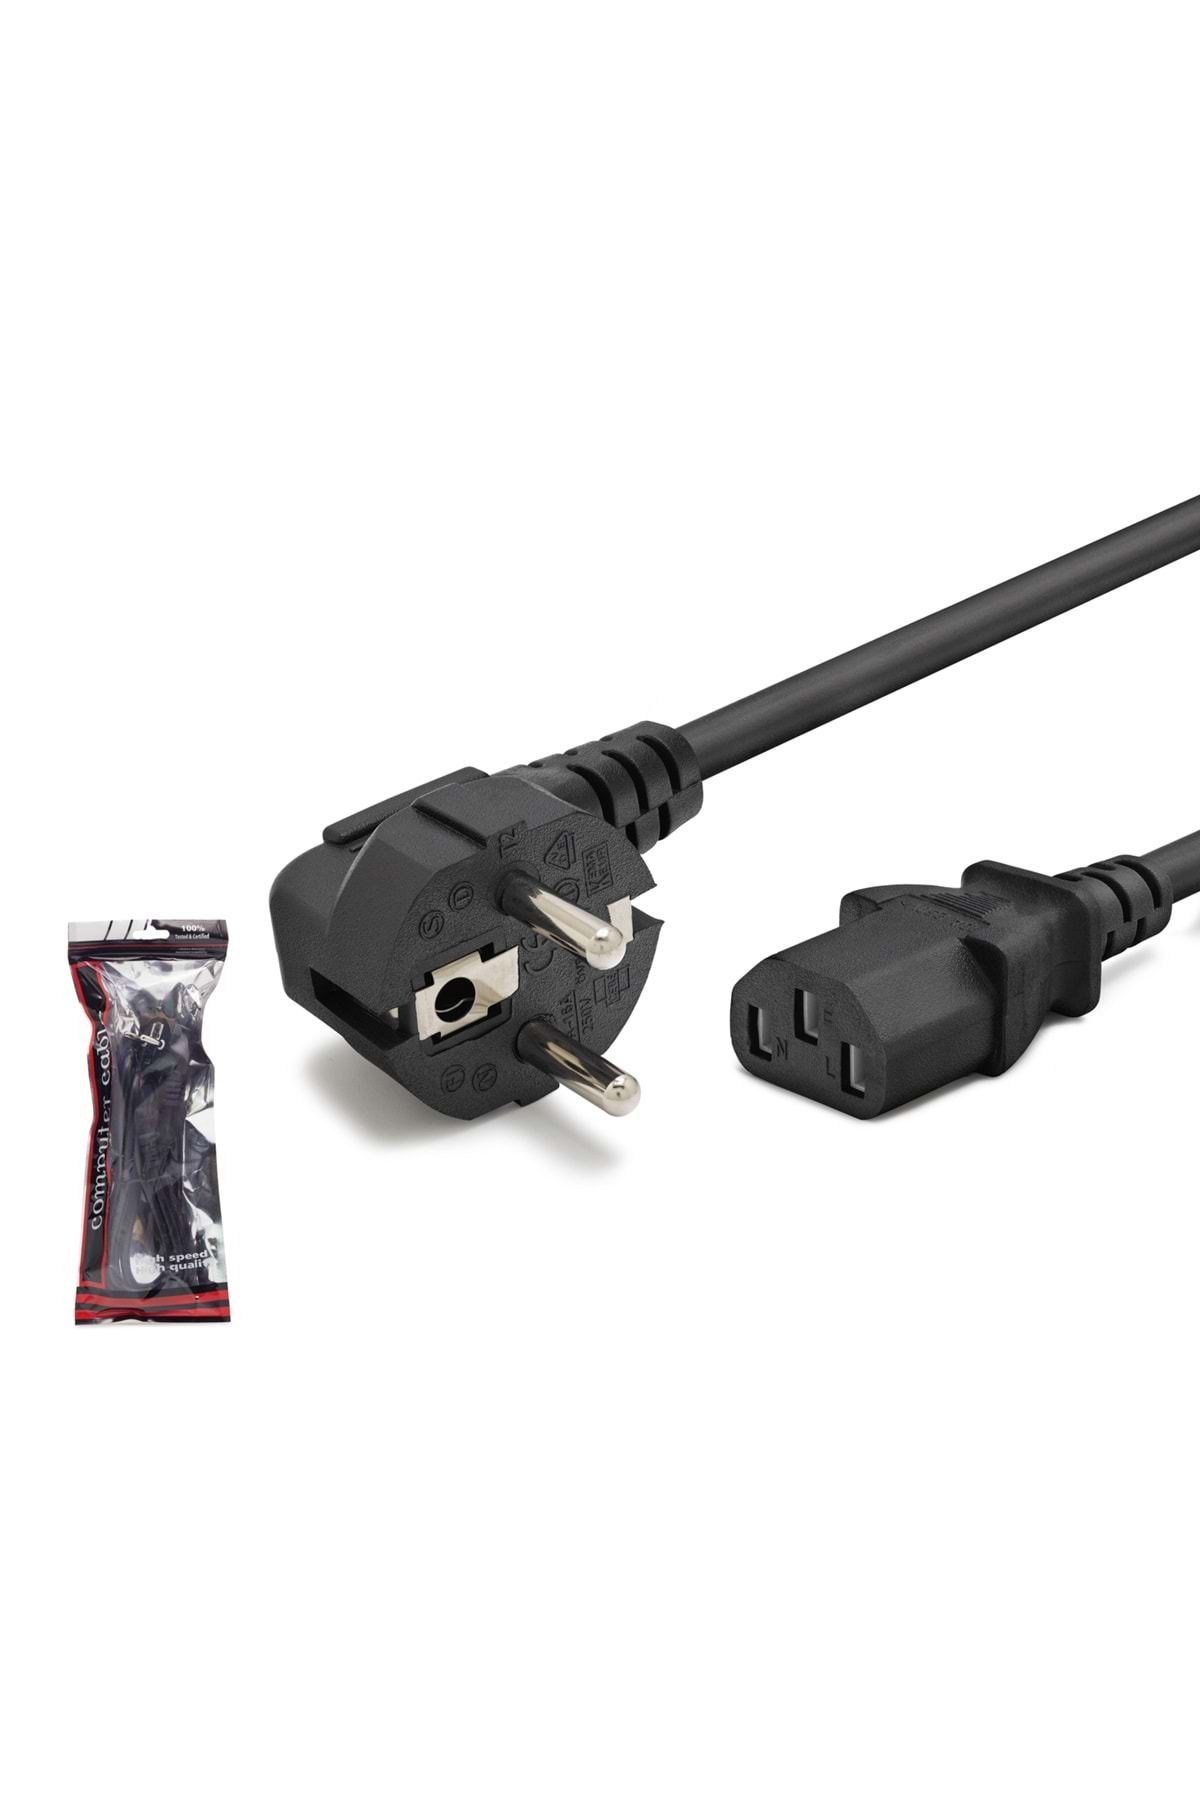 HADRON Hdx5502 Power Kablo Poşetli 0.75mm 1.5m Siyah 500w